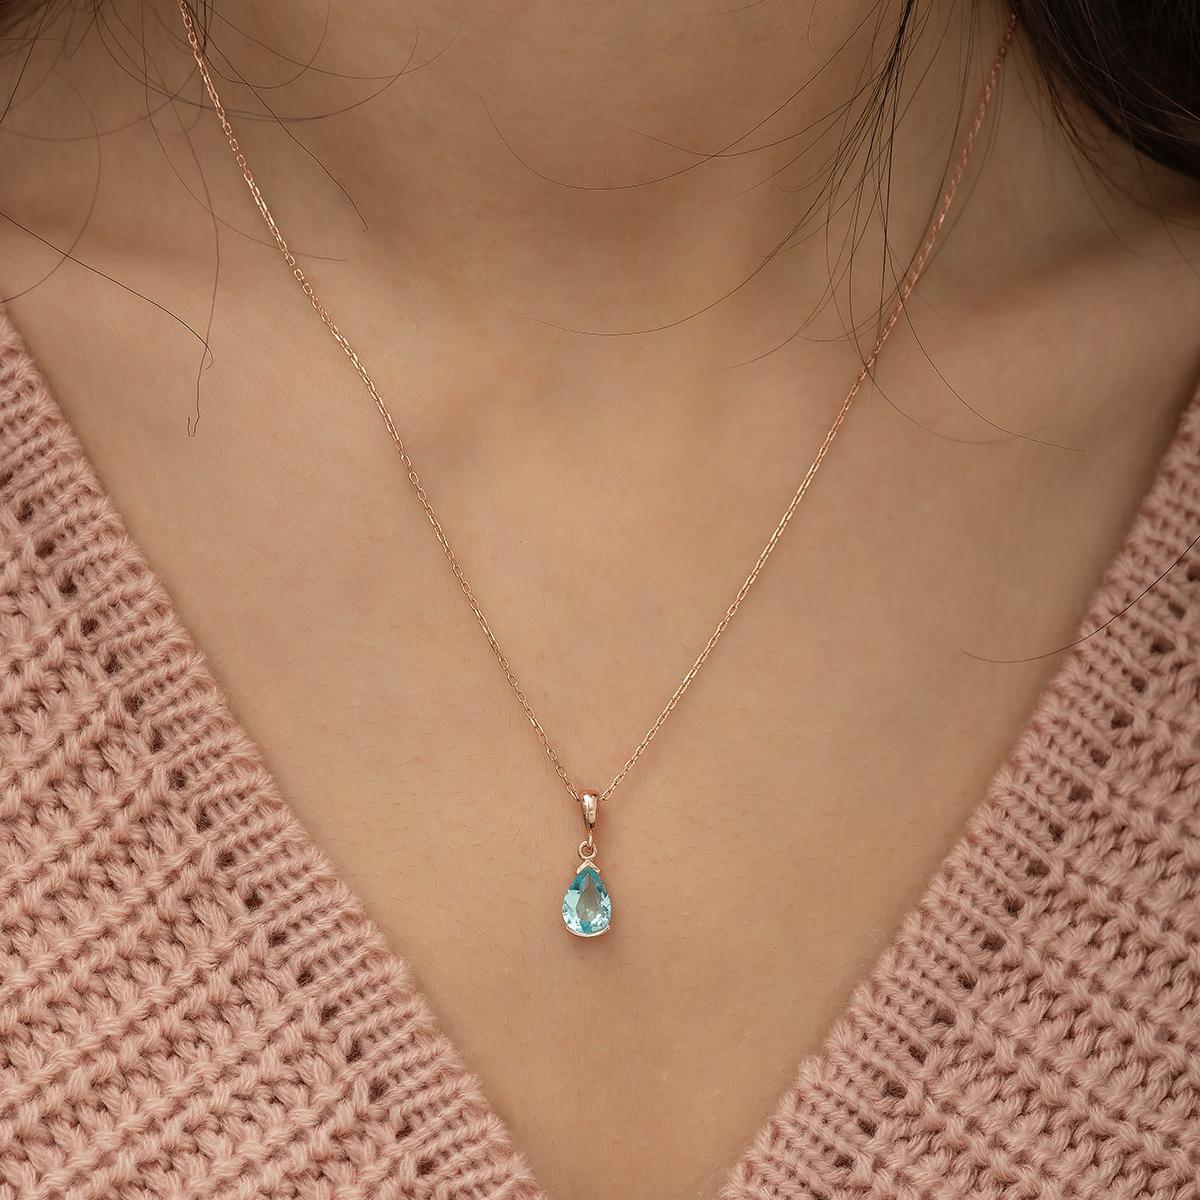 Aquamarine Teardrop Necklace • Aquamarine Birthstone Necklace Silver - Trending Silver Gifts